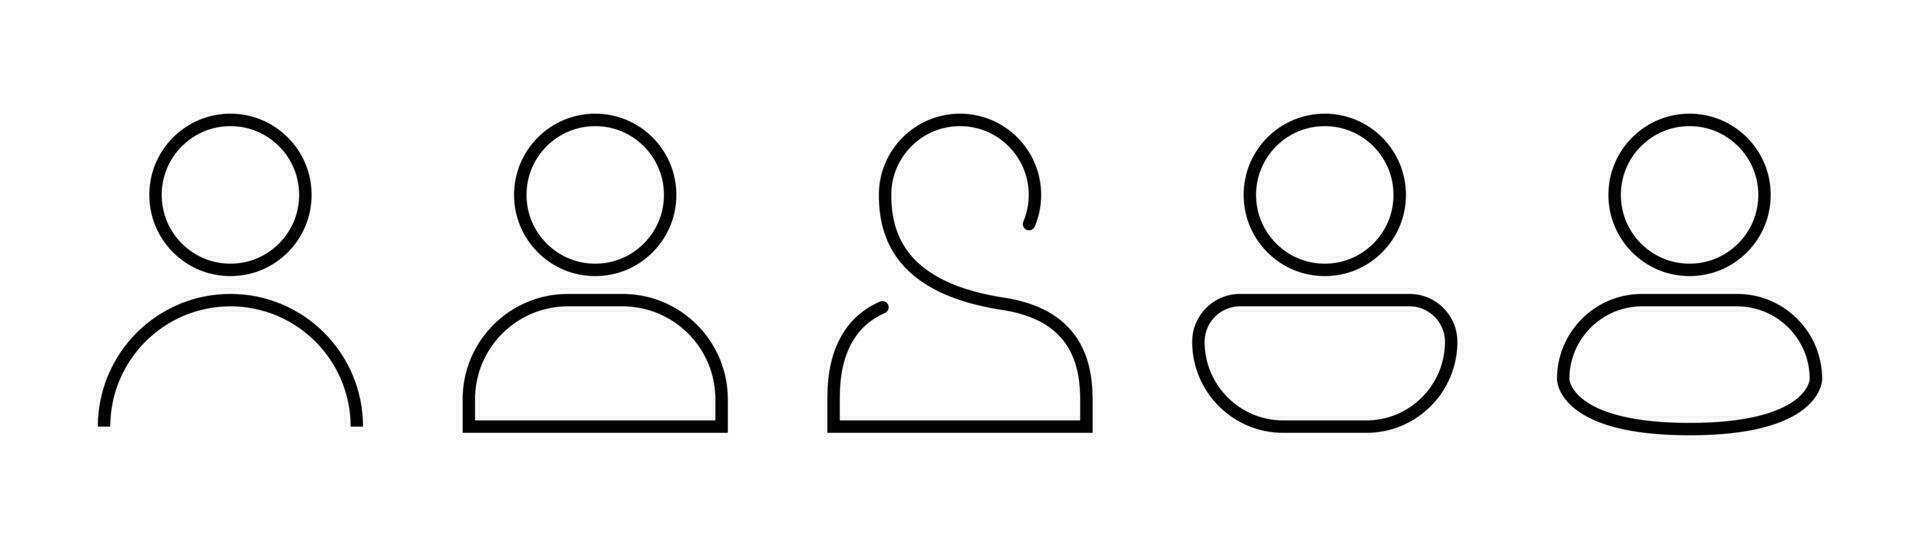 User avatar line icon. User profile icon set. Avatar symbol in outline. User pictogram in line. Stock vector illustration